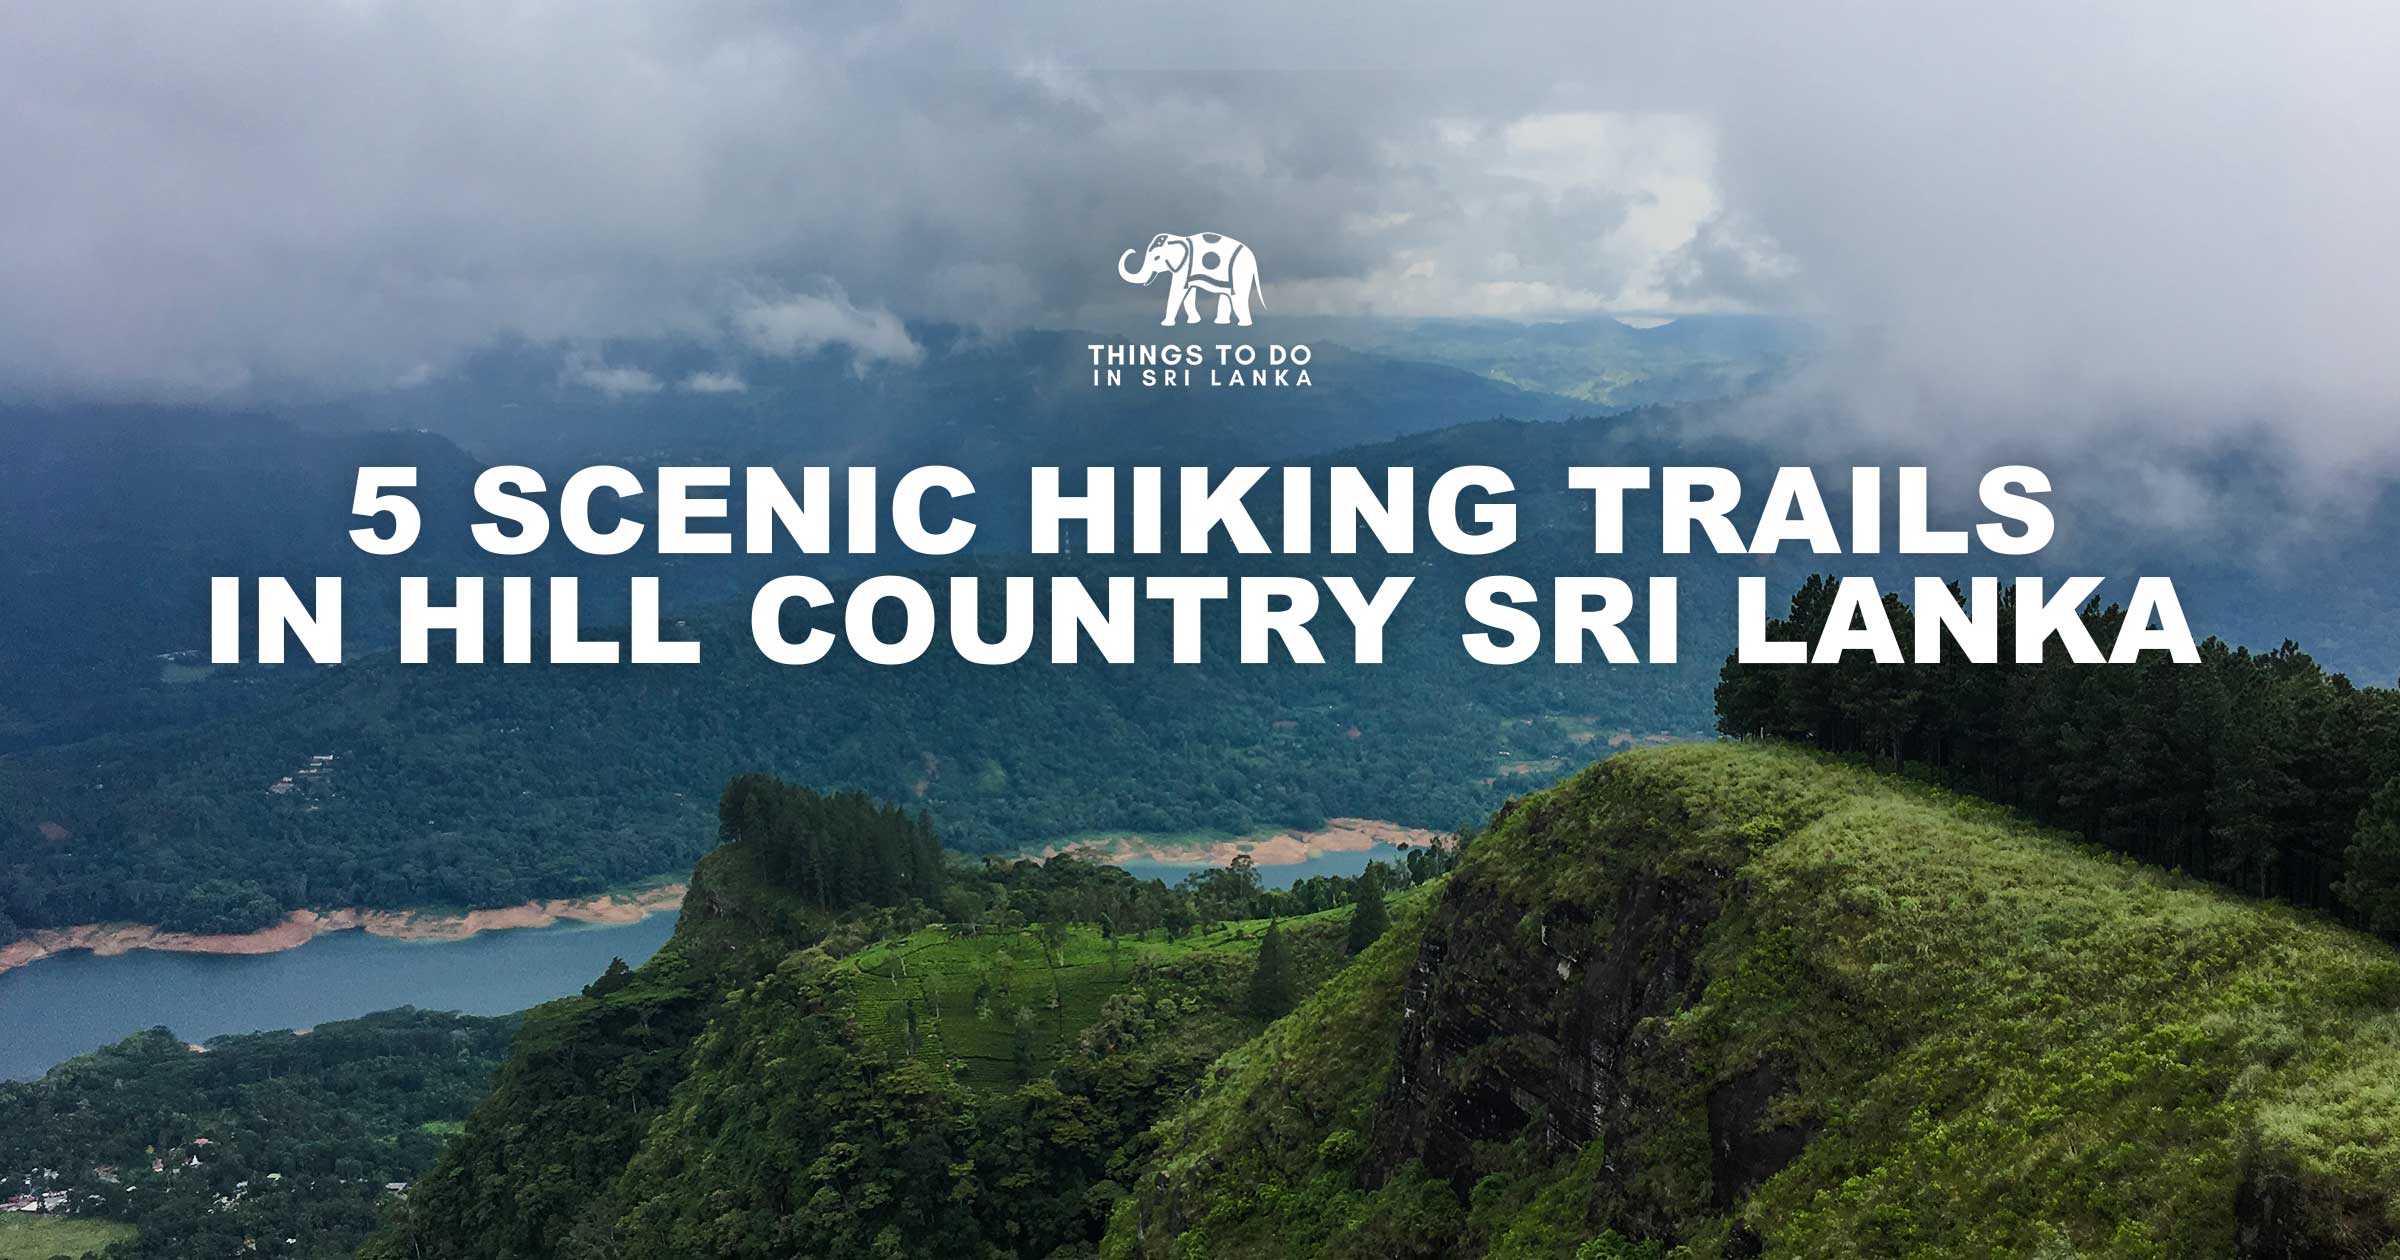 5 scenic hiking trails in hill country Sri Lanka